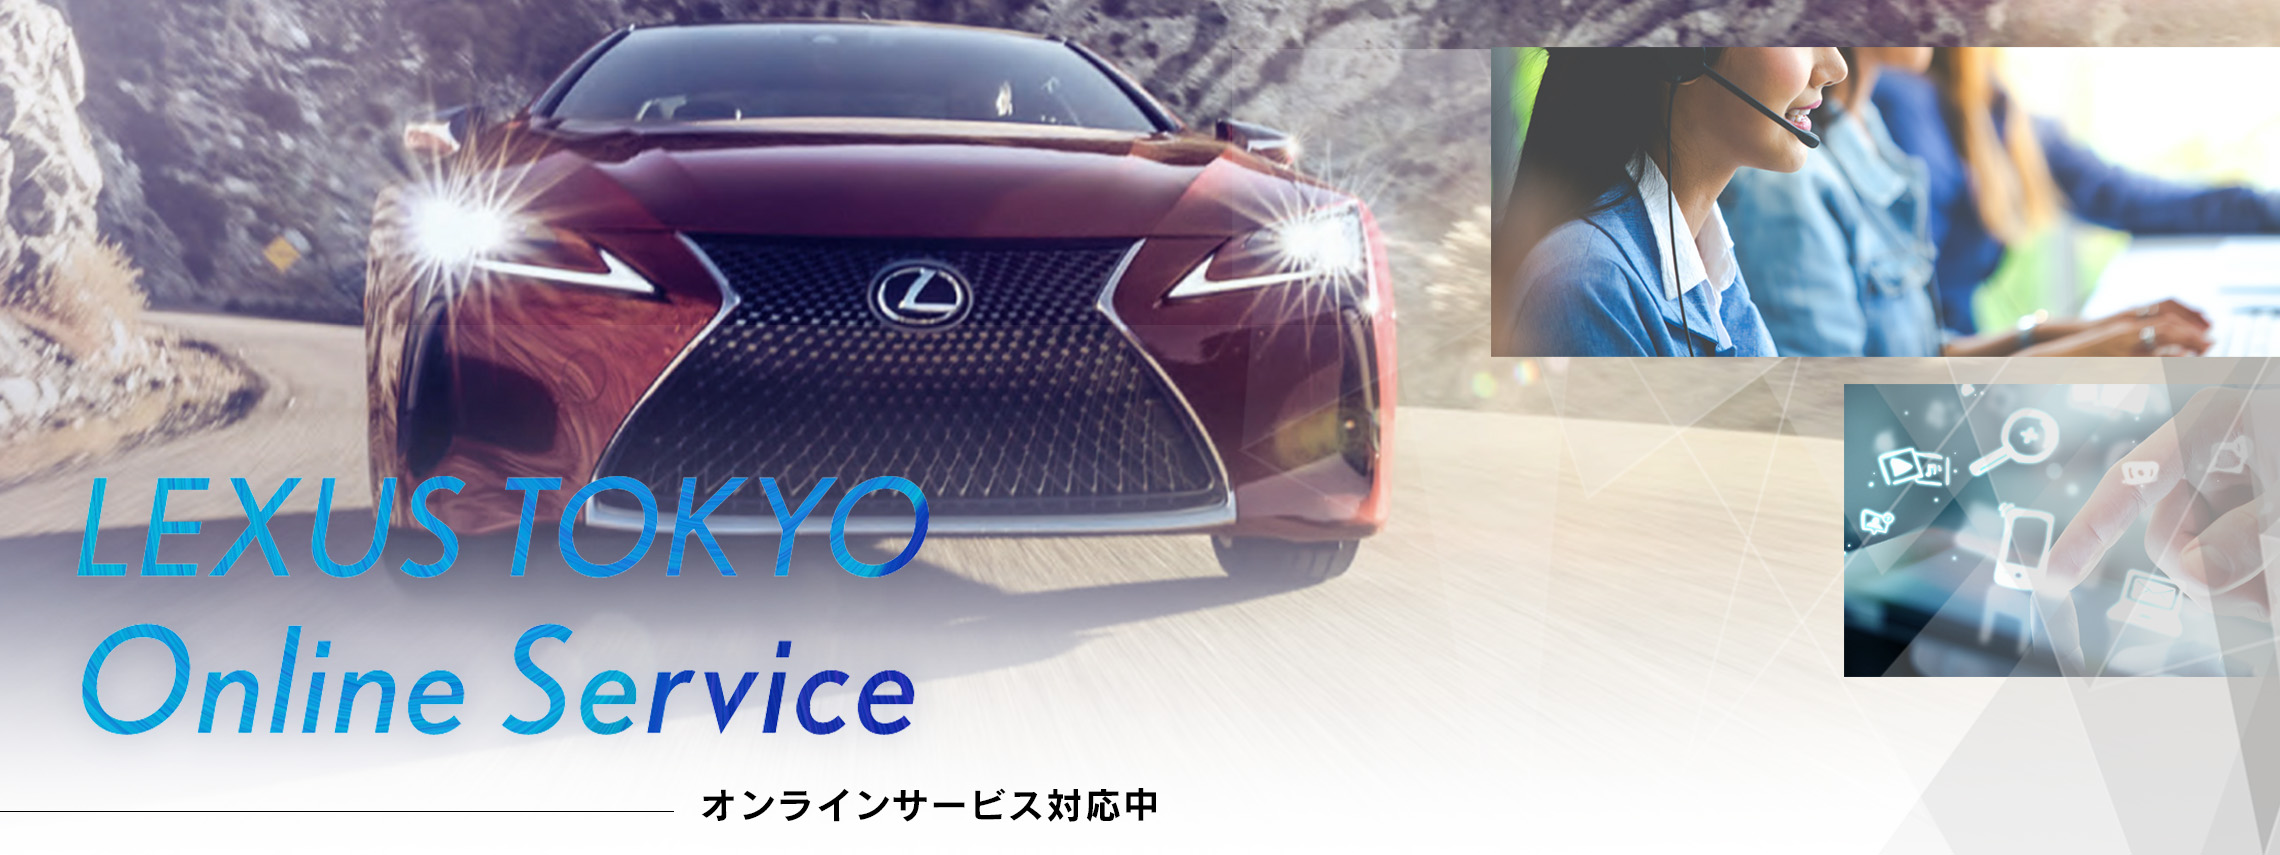 LEXUS TOKYO Online Service